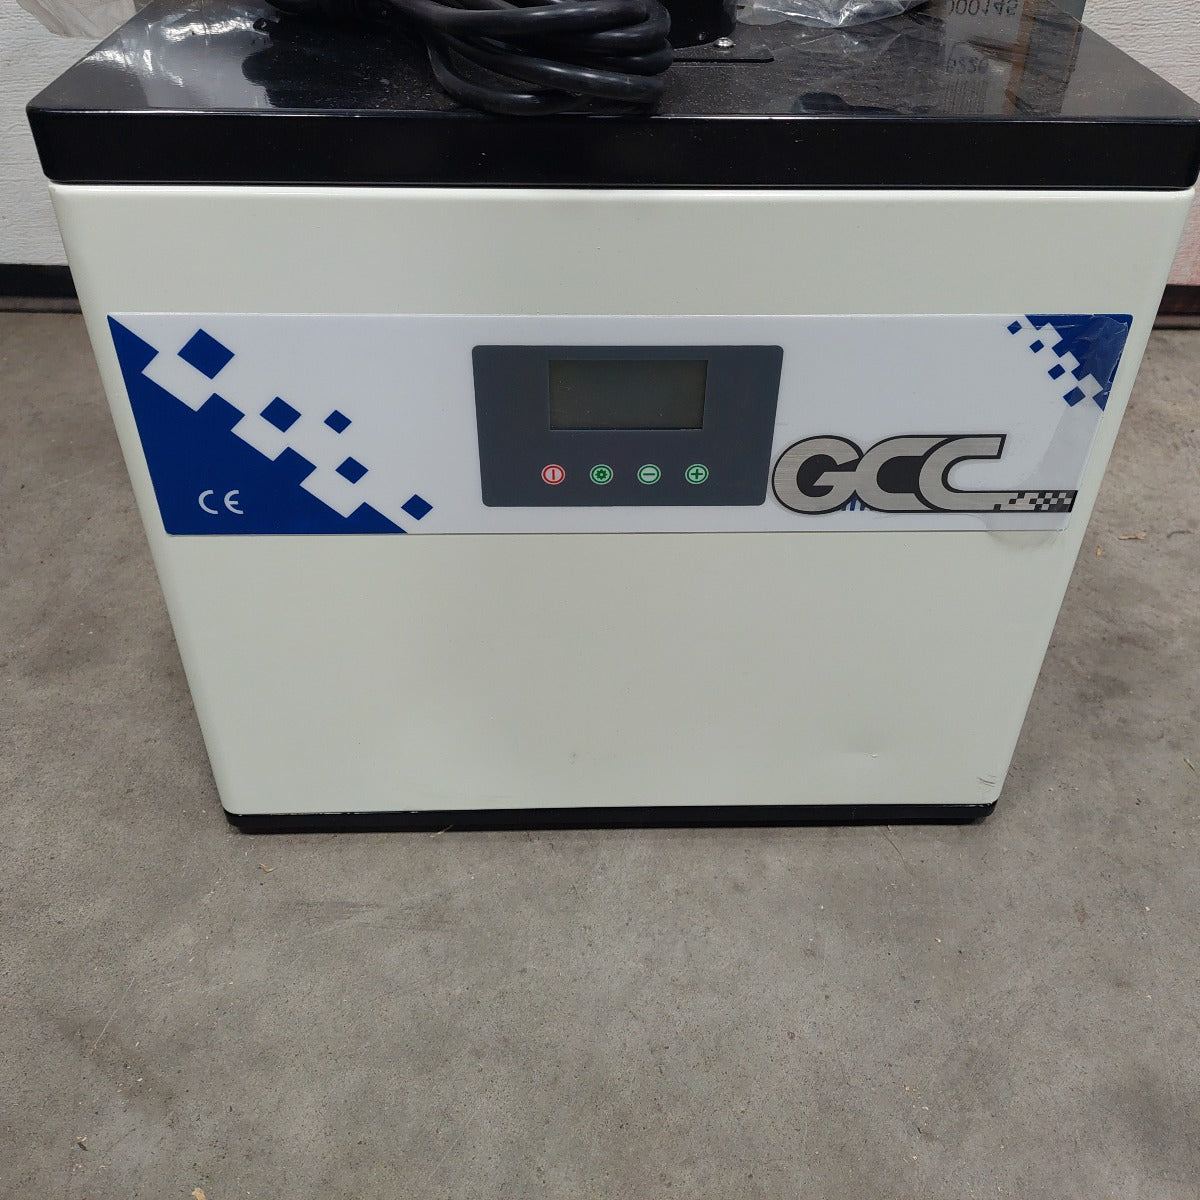 GCC LaserPro PA-300TS-IQ Fume Extractor System New